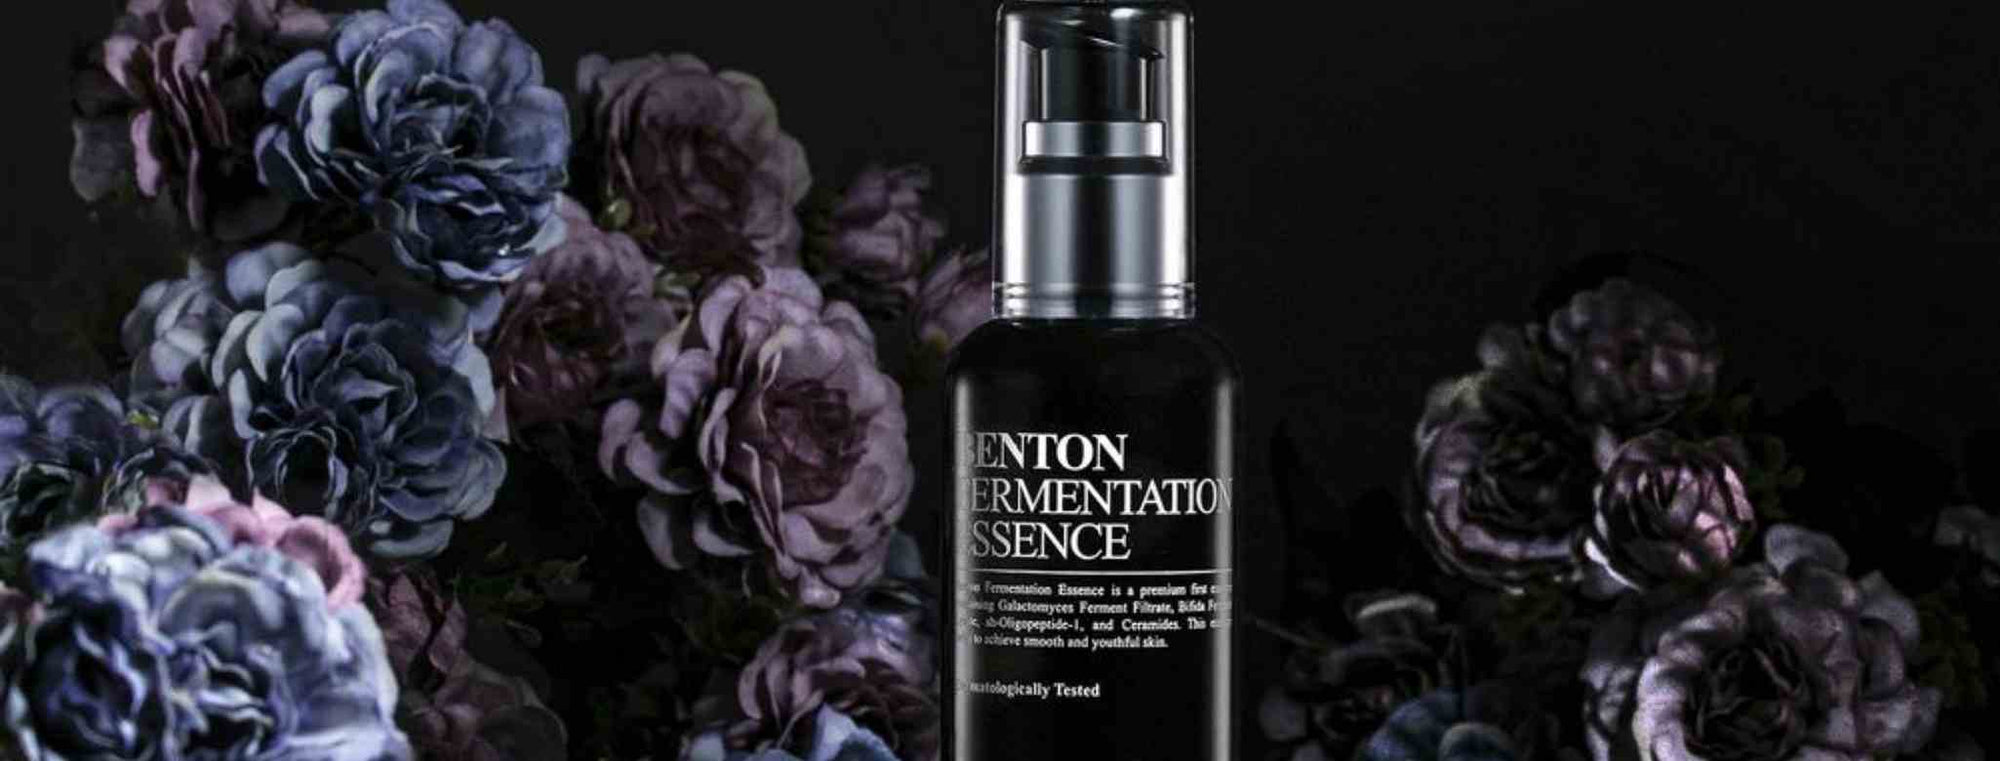 benton cosmetics skincare snail bee essence